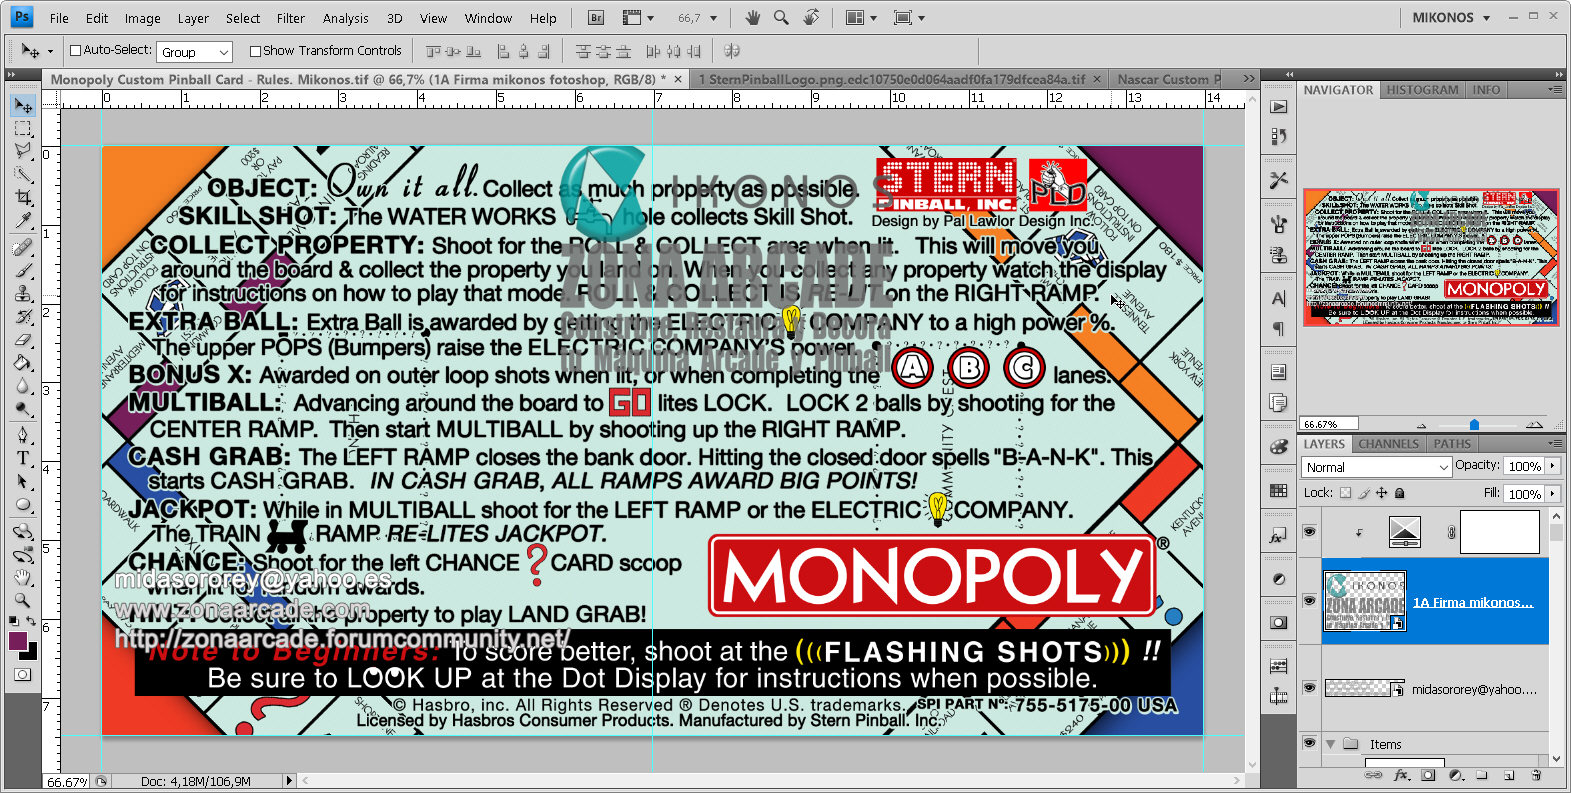 Monopoly%20Pinball%20Card%20Customized%20-%20Rules.%20Mikonos1.jpg